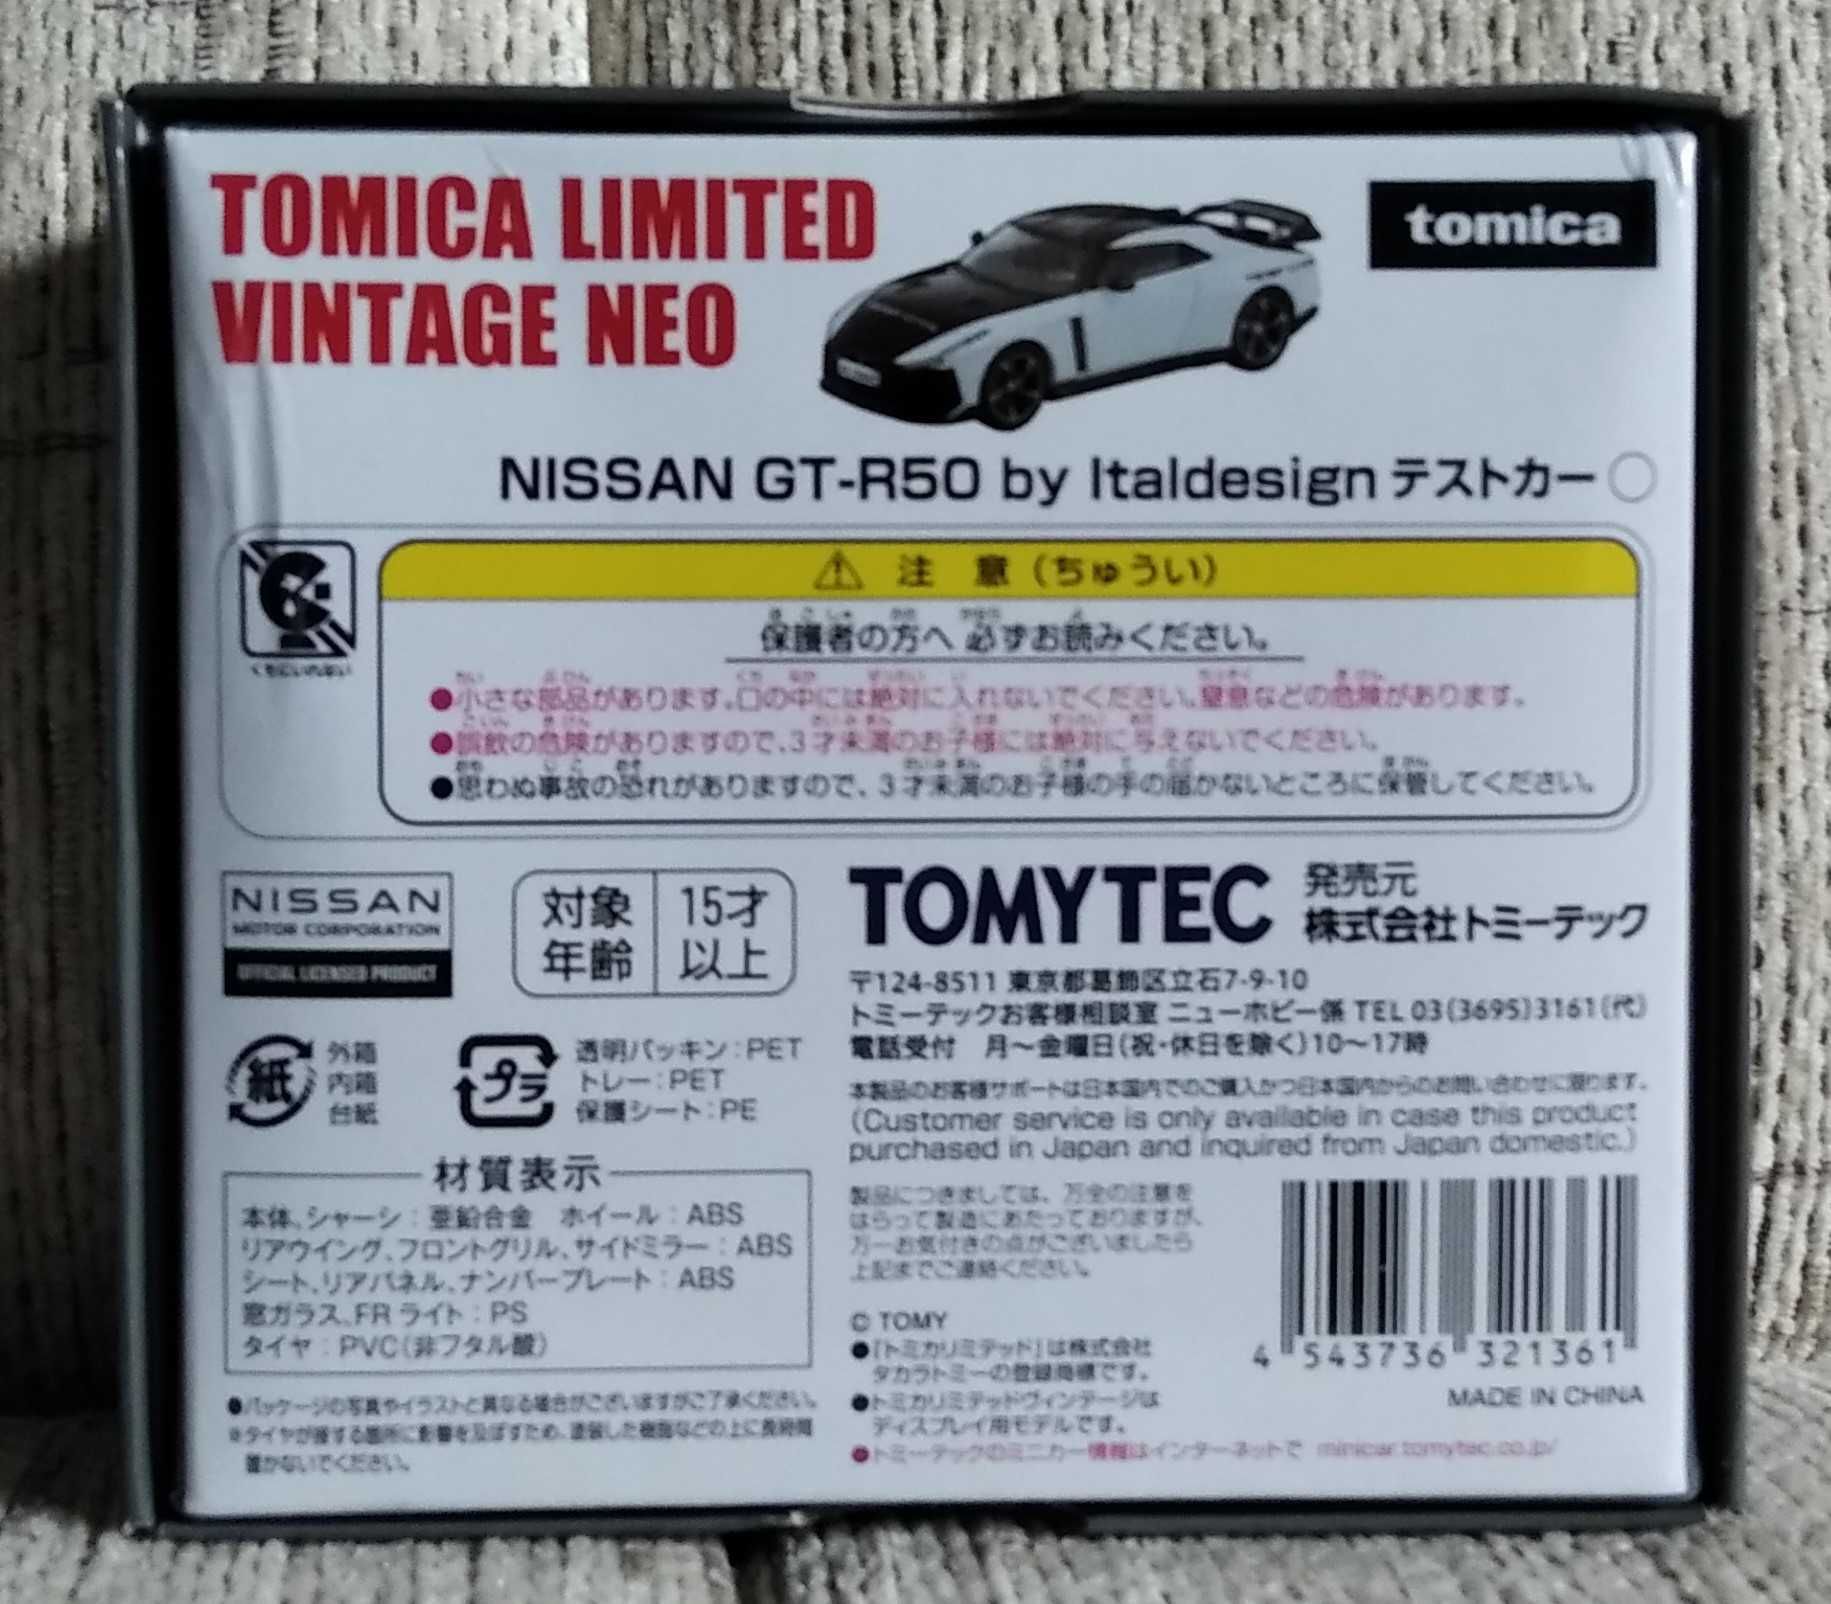 Tomica Limited Vintage Neo LV-N Nissan GT-R50 by Italdesign